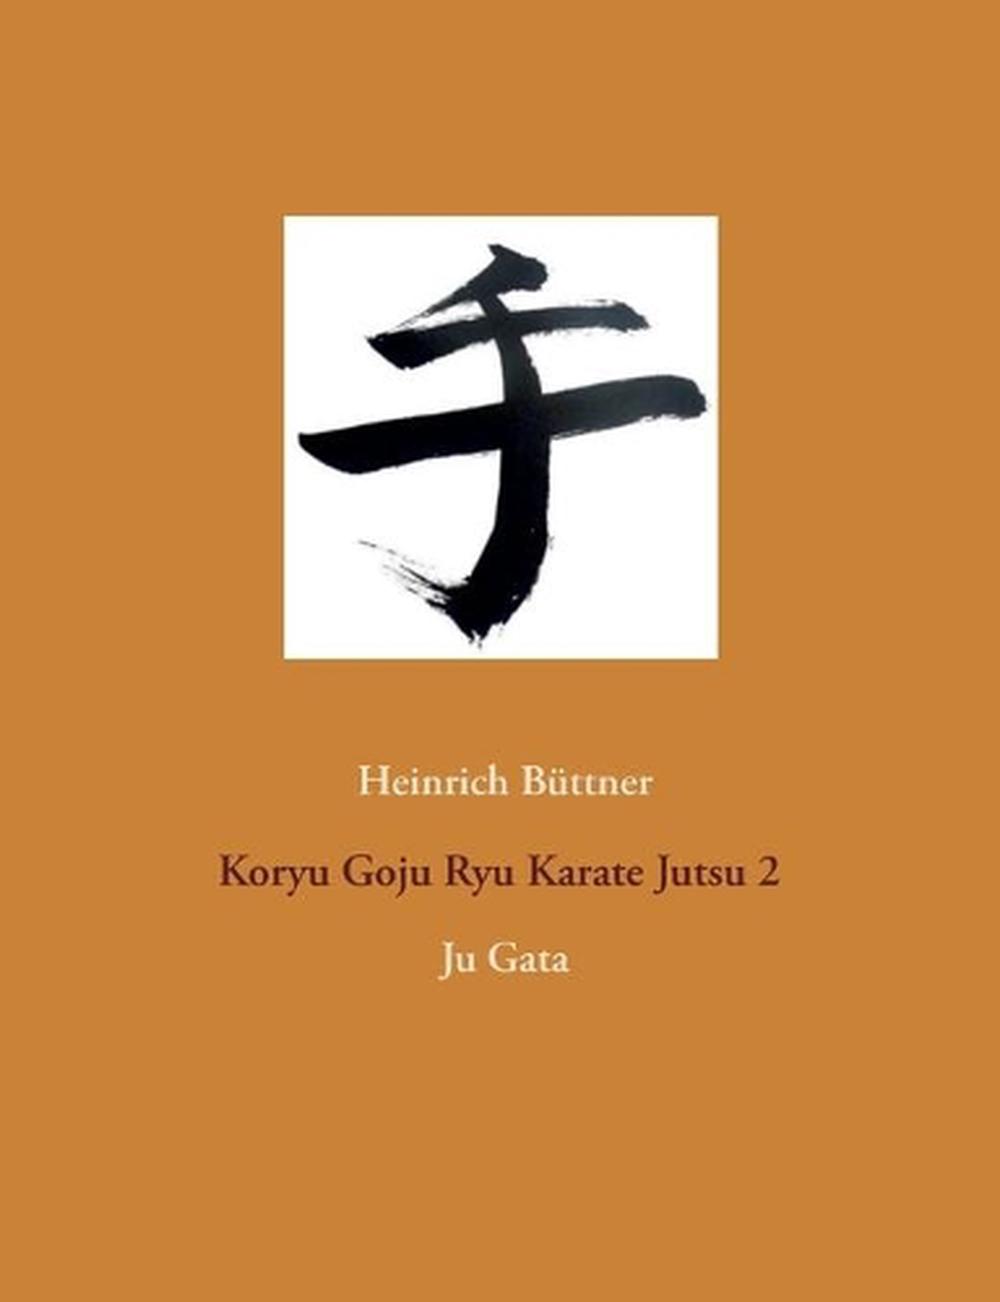 Koryu Goju Ryu Karate Jutsu 2 by Heinrich Buttner (German) Paperback